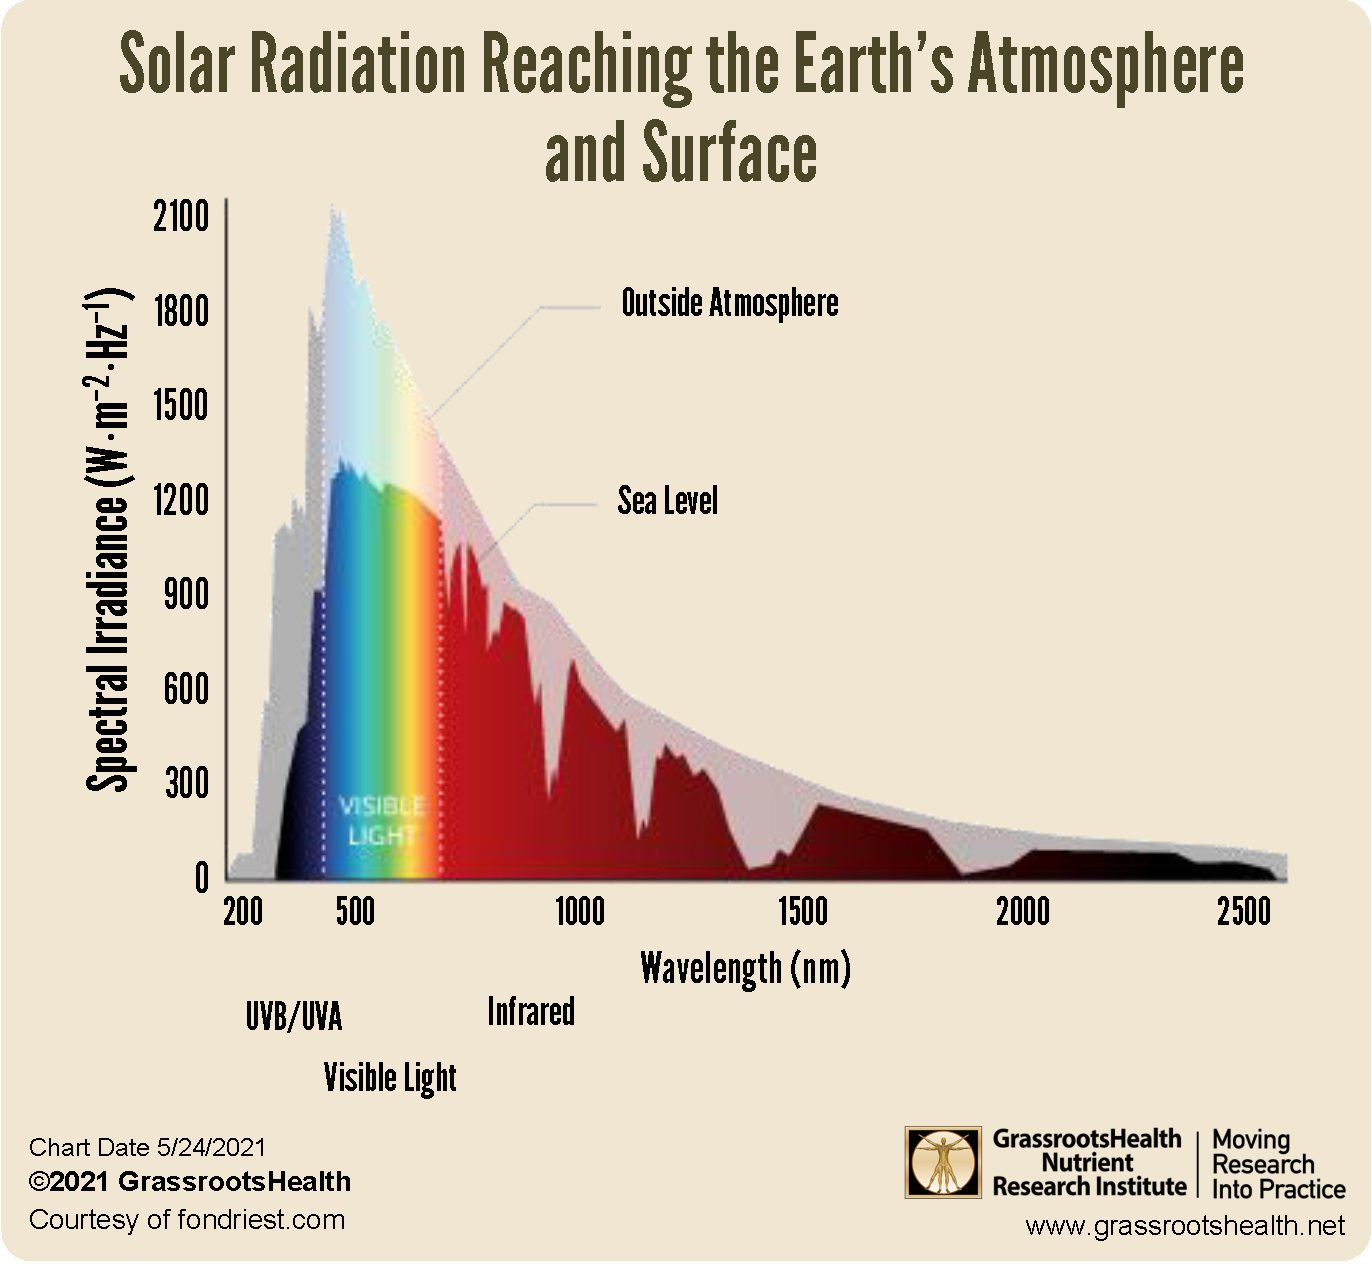 solar radiation wavelength